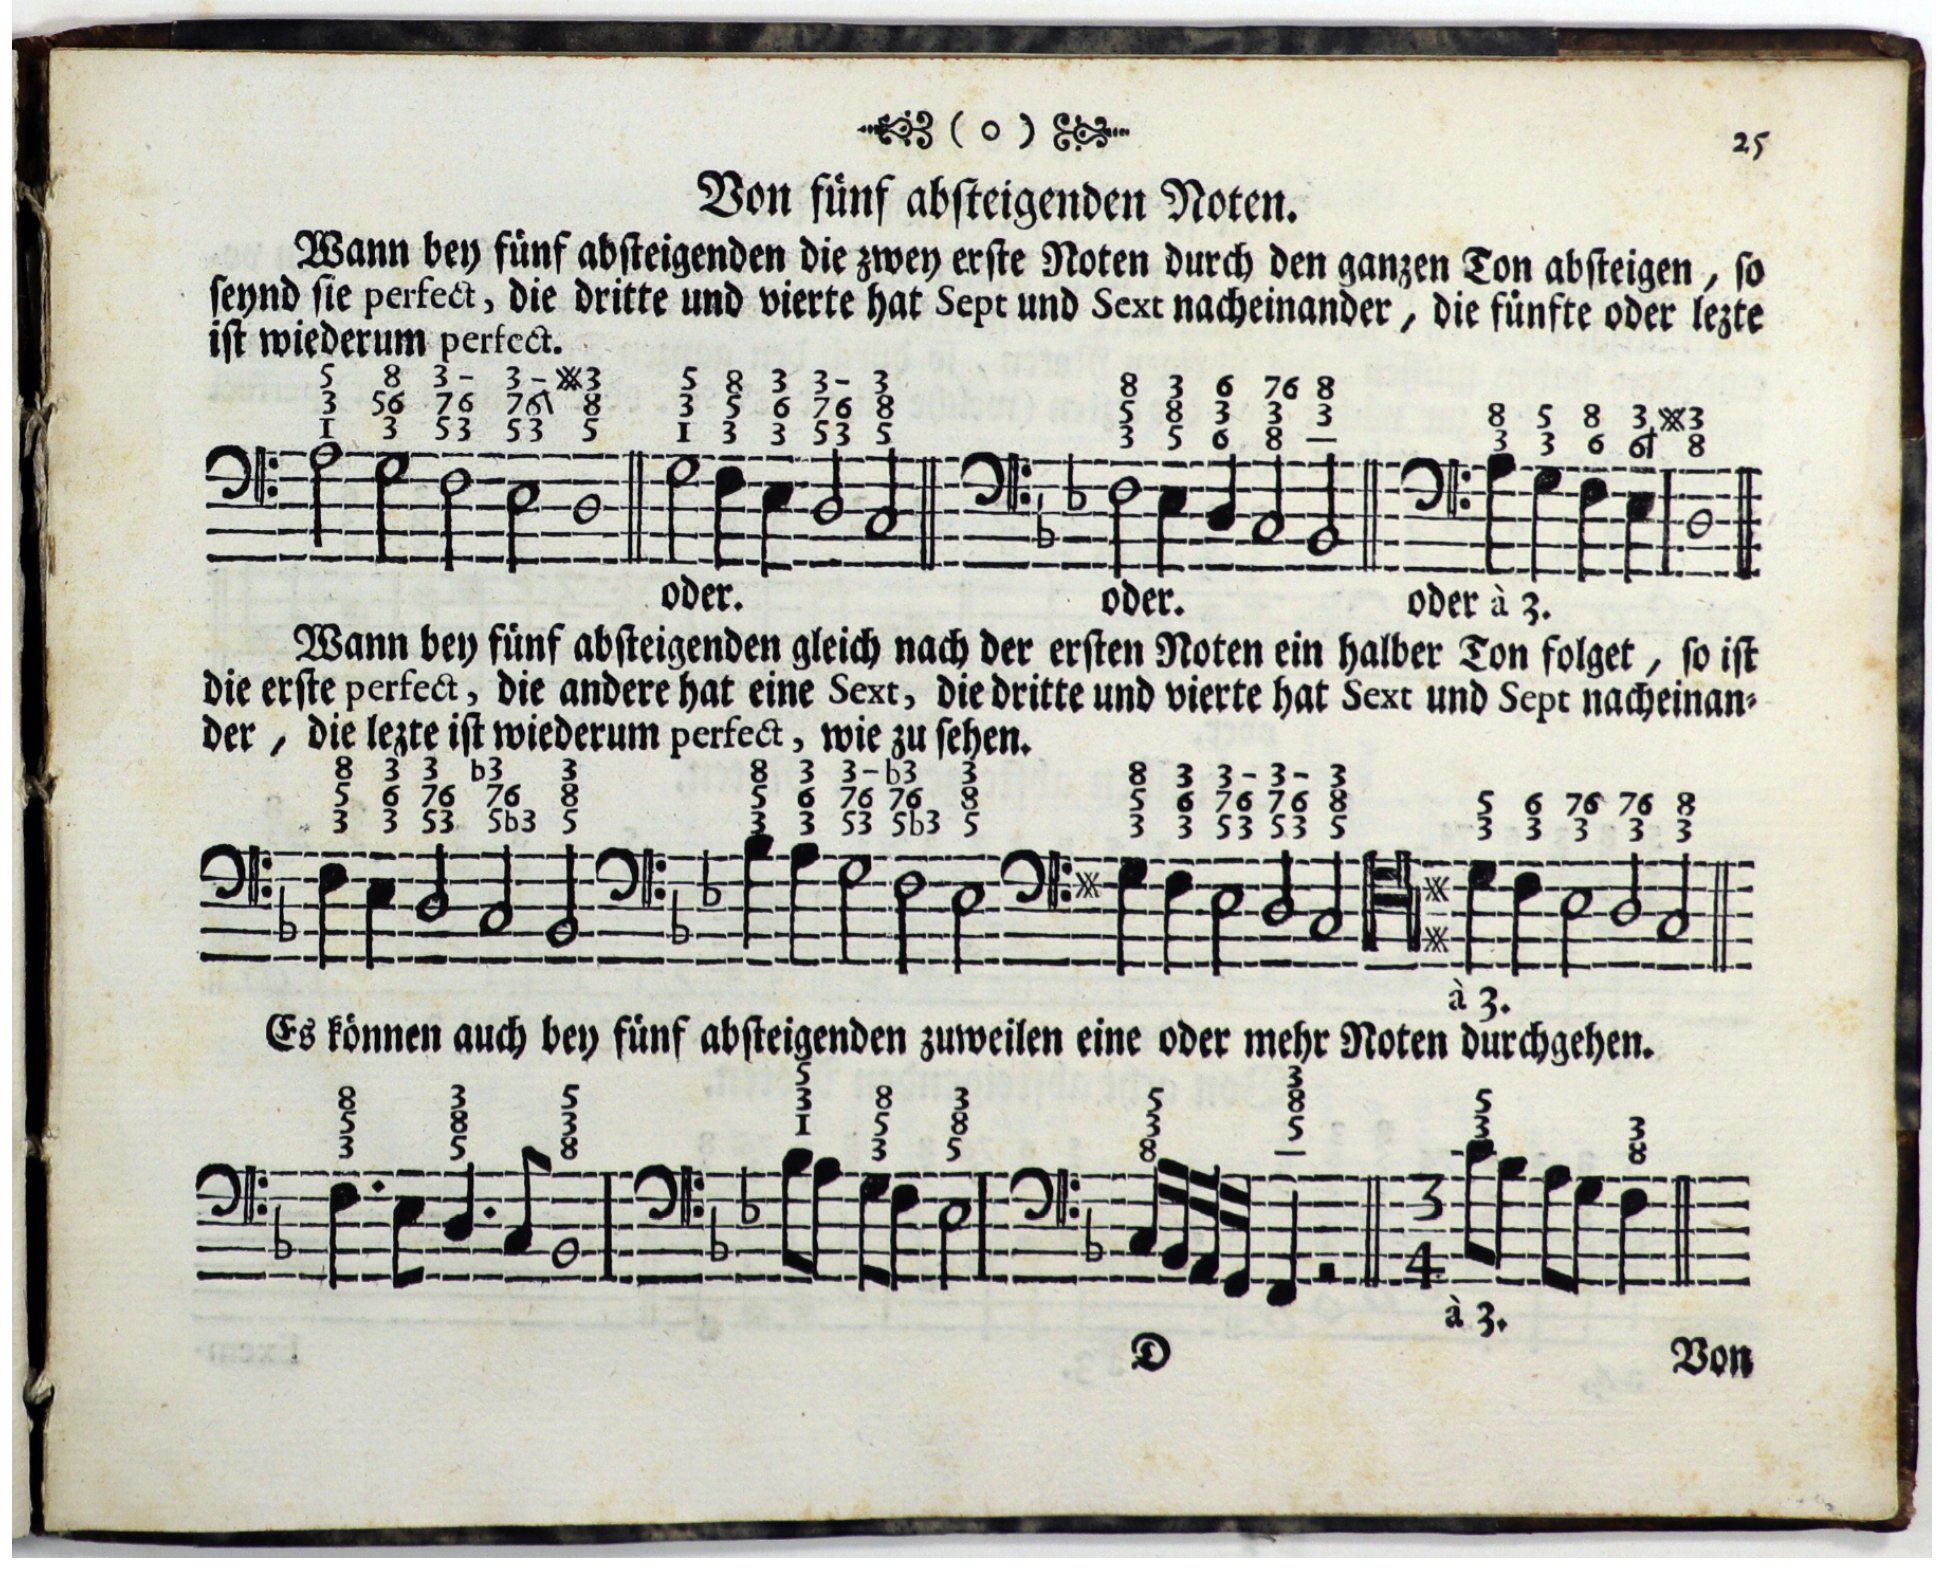 Johann Xaver Nauss ( 1690 - 1764): Gründlicher Unterricht den General-Bass recht zu lernen, Augsburg 1751 (Städtisches Museum Schloss Rheydt CC0)